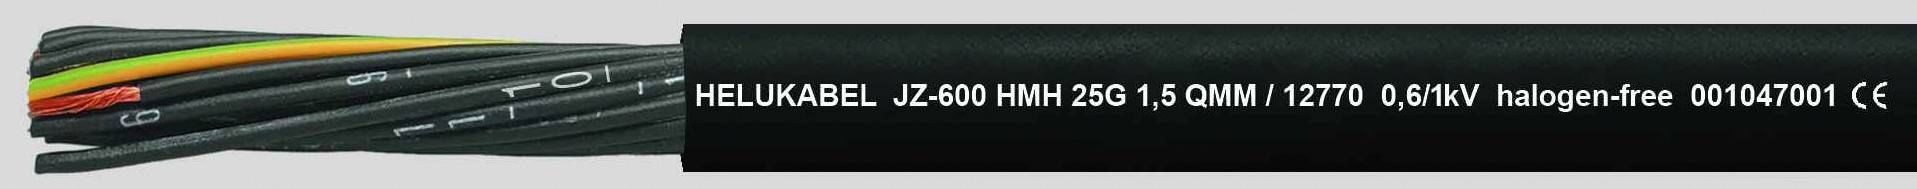 HELUKABEL JZ-500 HMH Steuerleitung 2 x 0.75 mm² Schwarz 12735-500 500 m